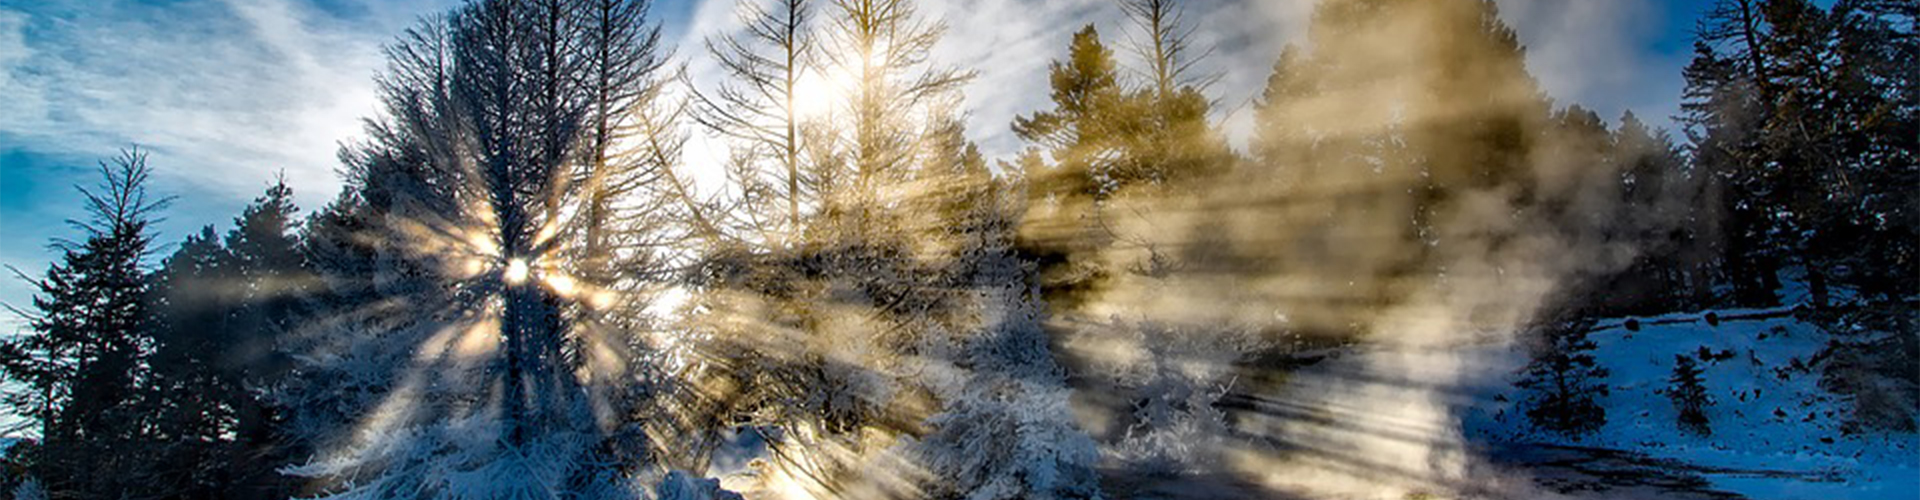 Sun rays in winter